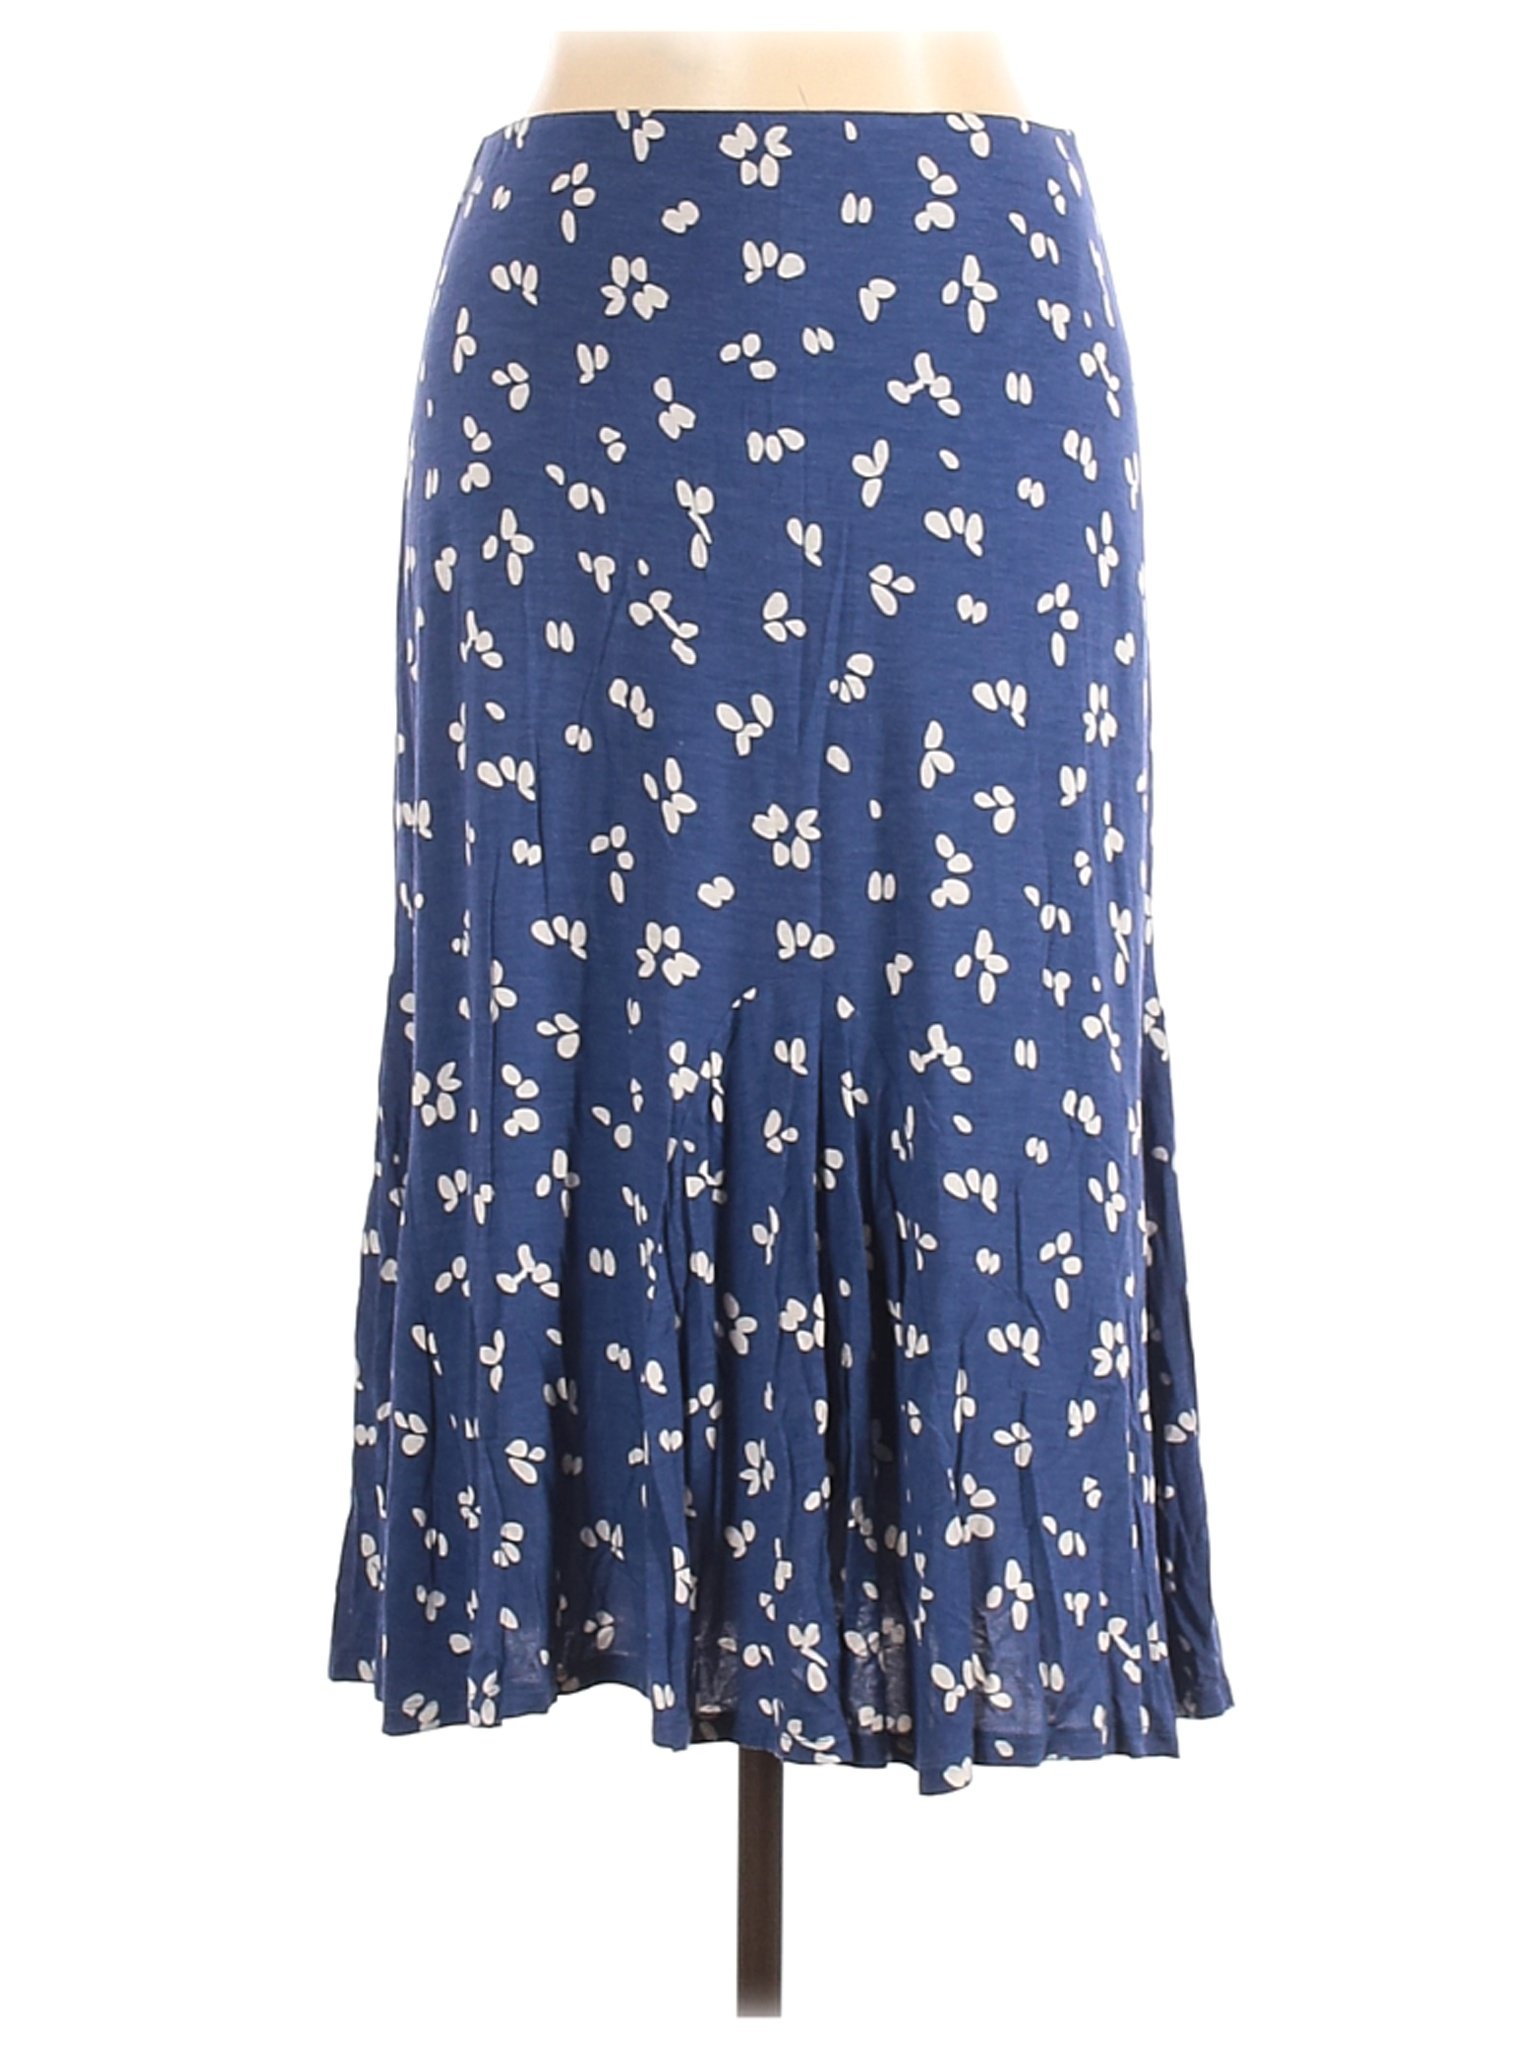 Boden Women Blue Casual Skirt 10 | eBay